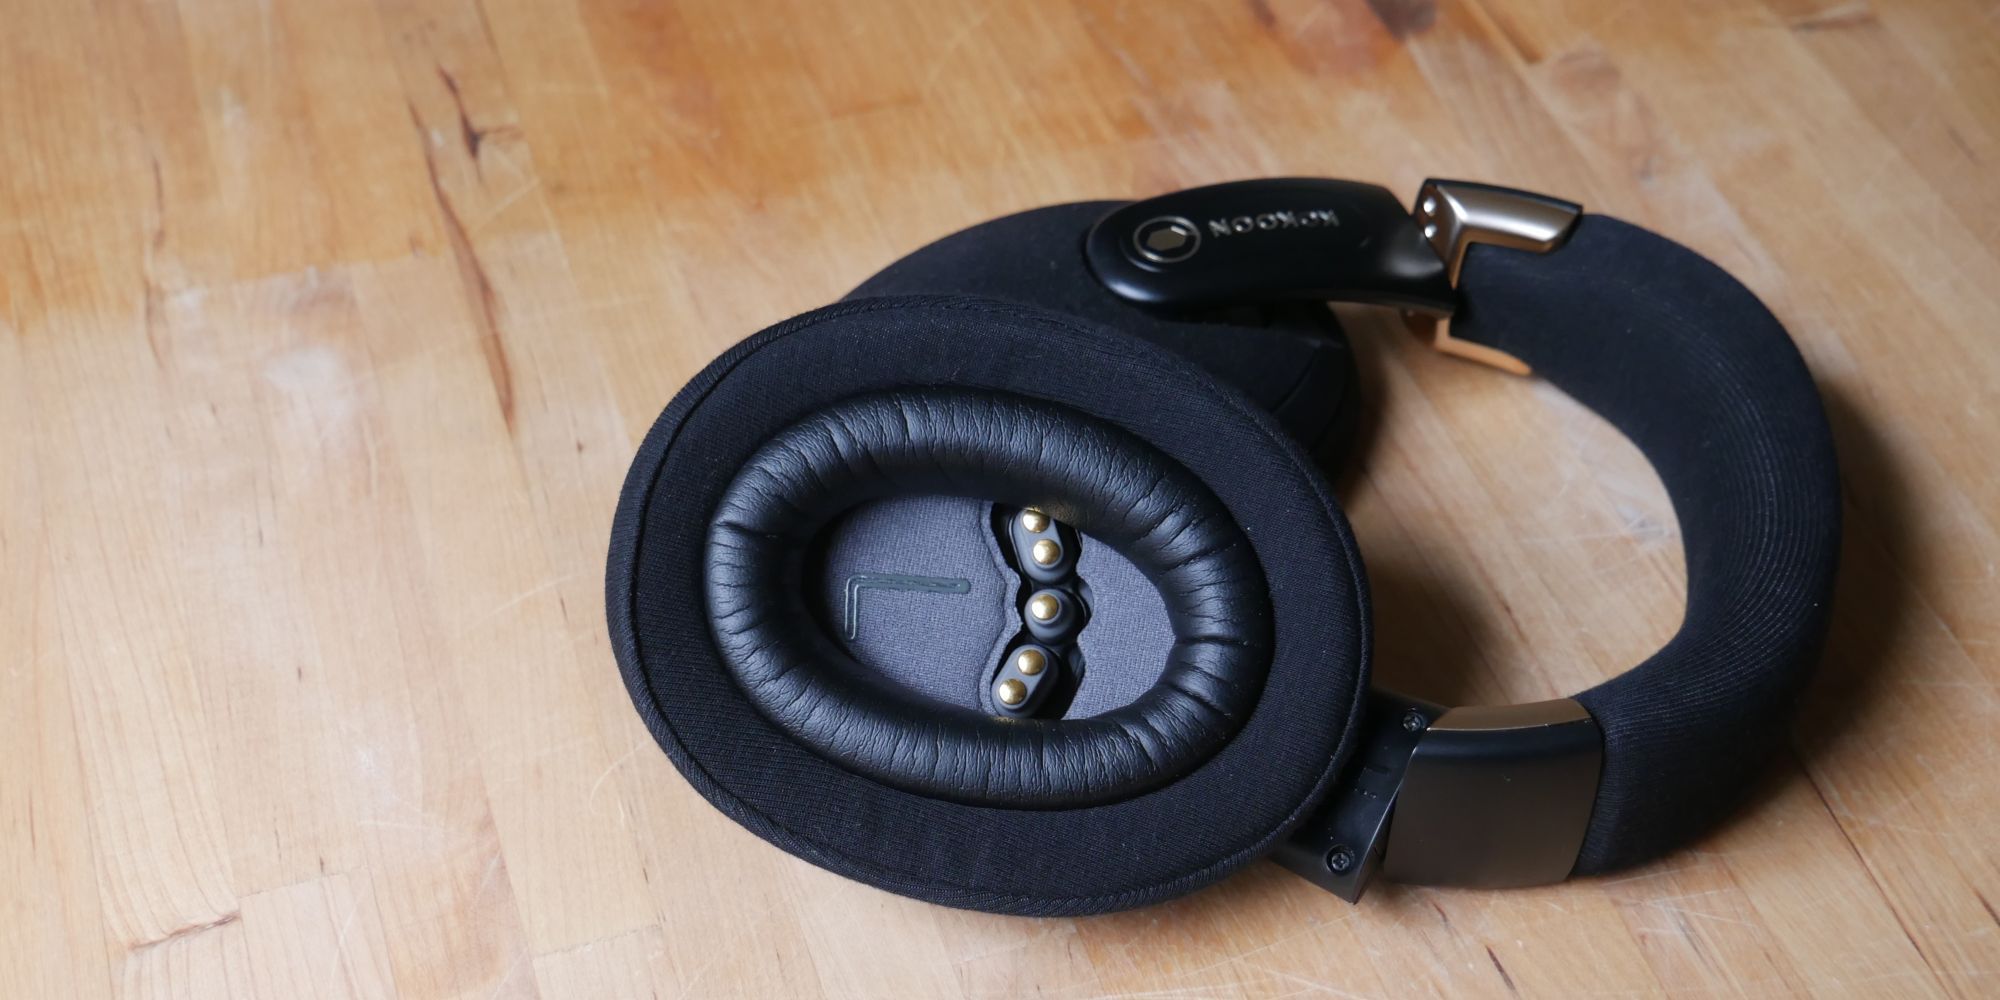 Kokoon Sleep Headphones with left ear cup turned over